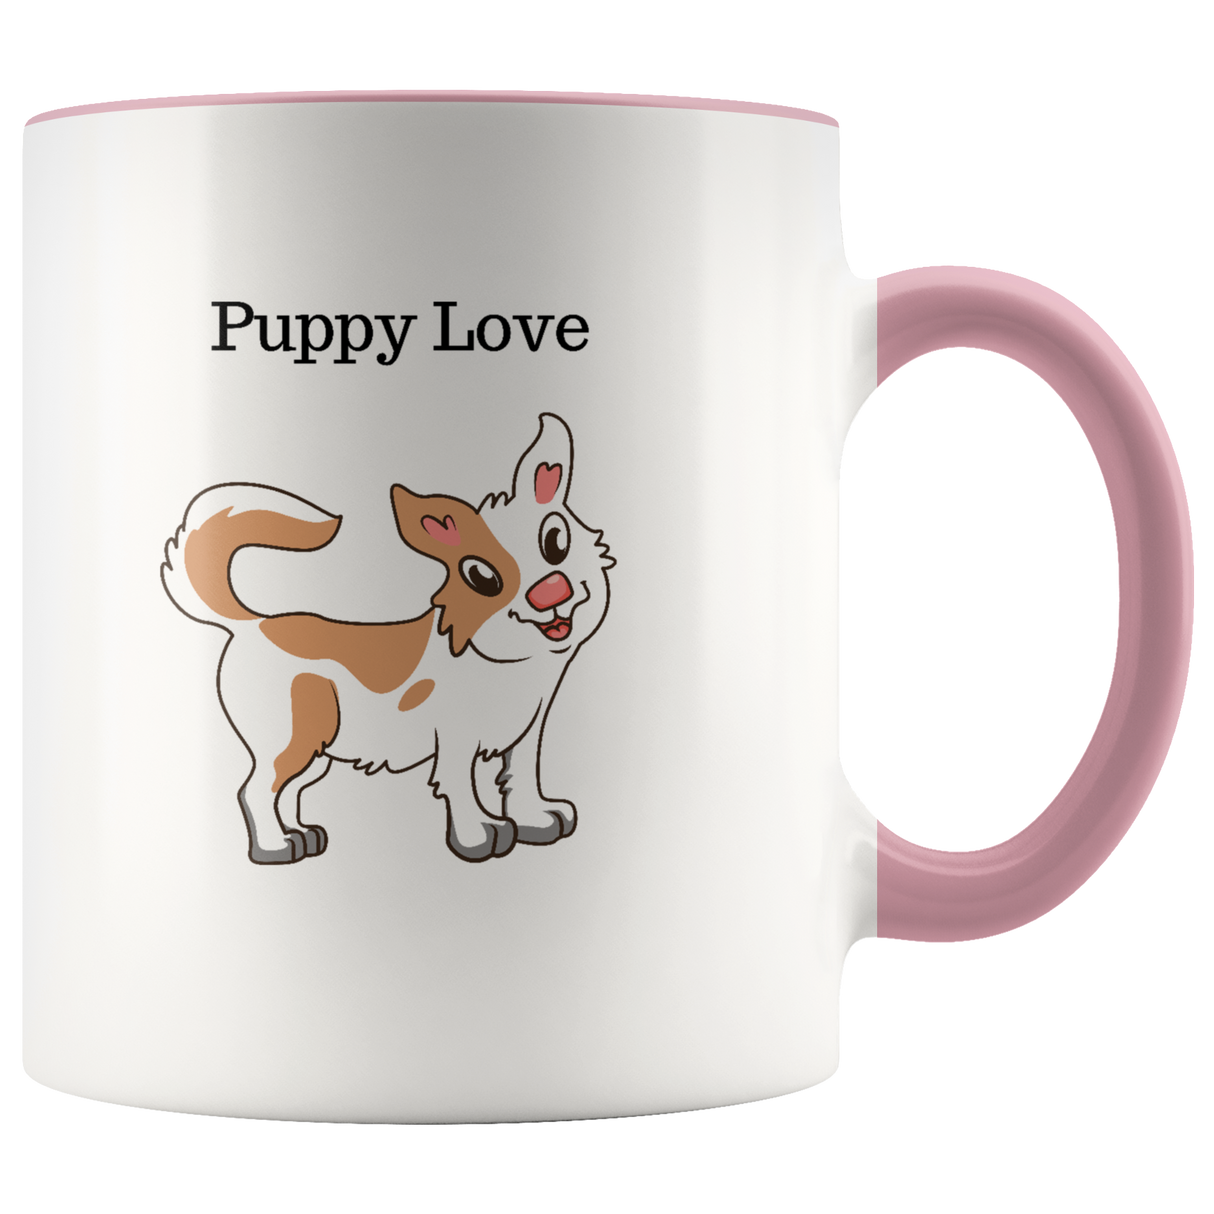 Mug Puppy Ceramic Accent Mug - Pink | Shop Sassy Chick